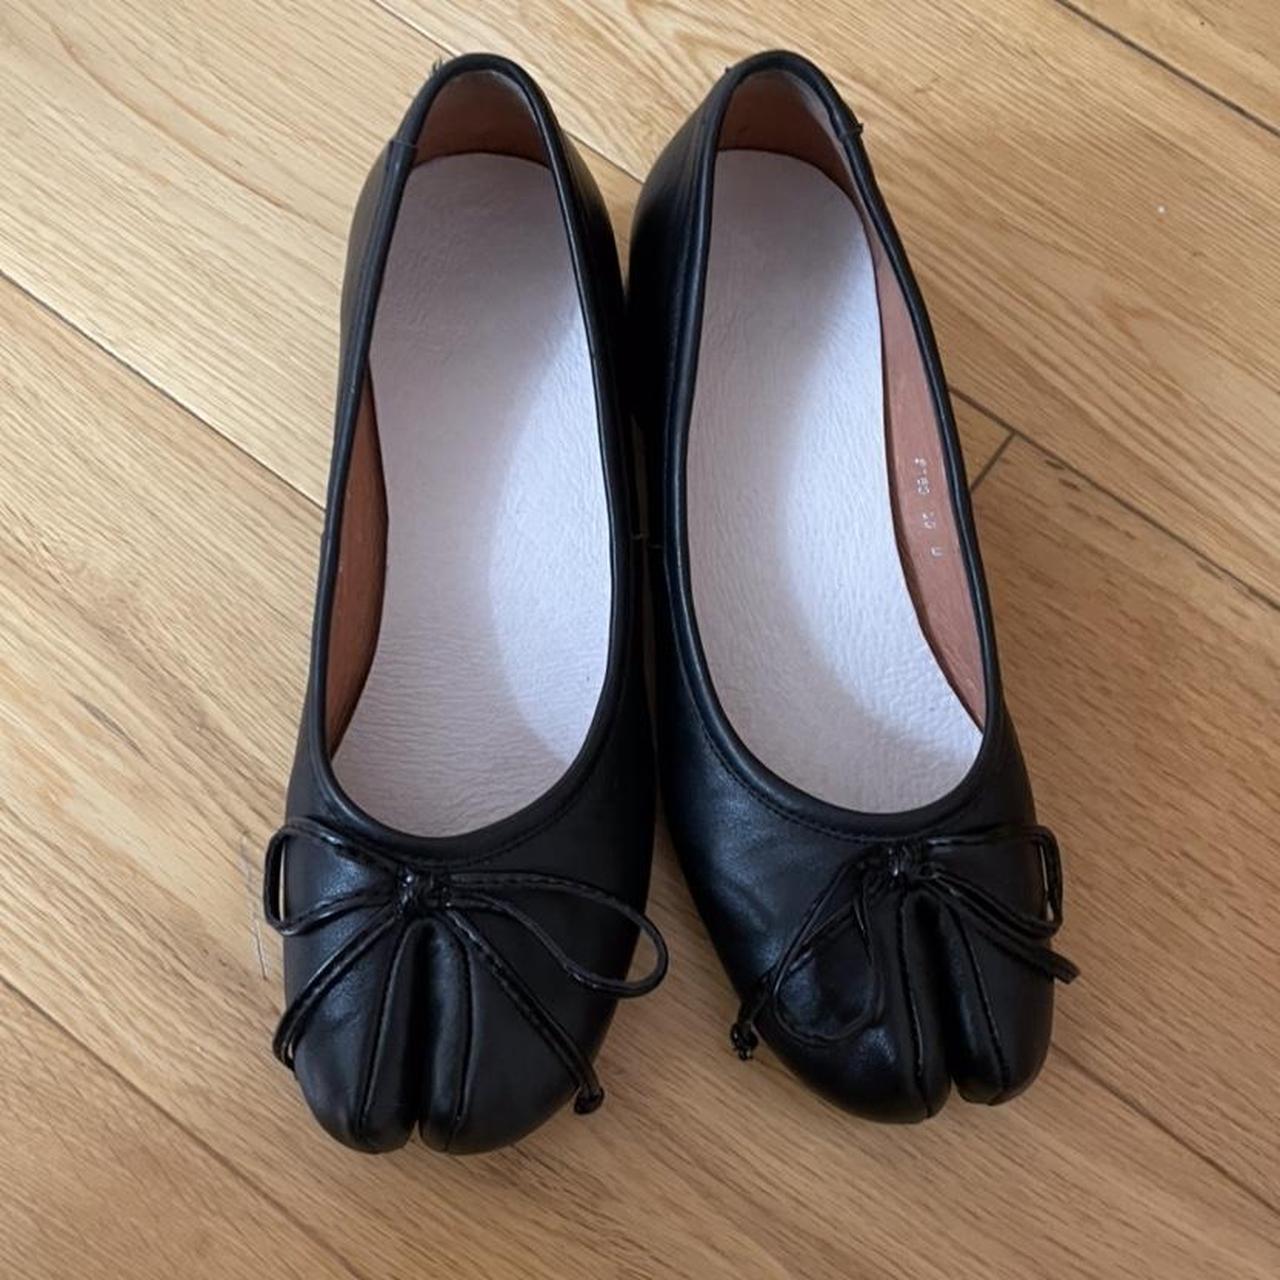 Cute black camel toe heeled ballet pumps in a size... - Depop